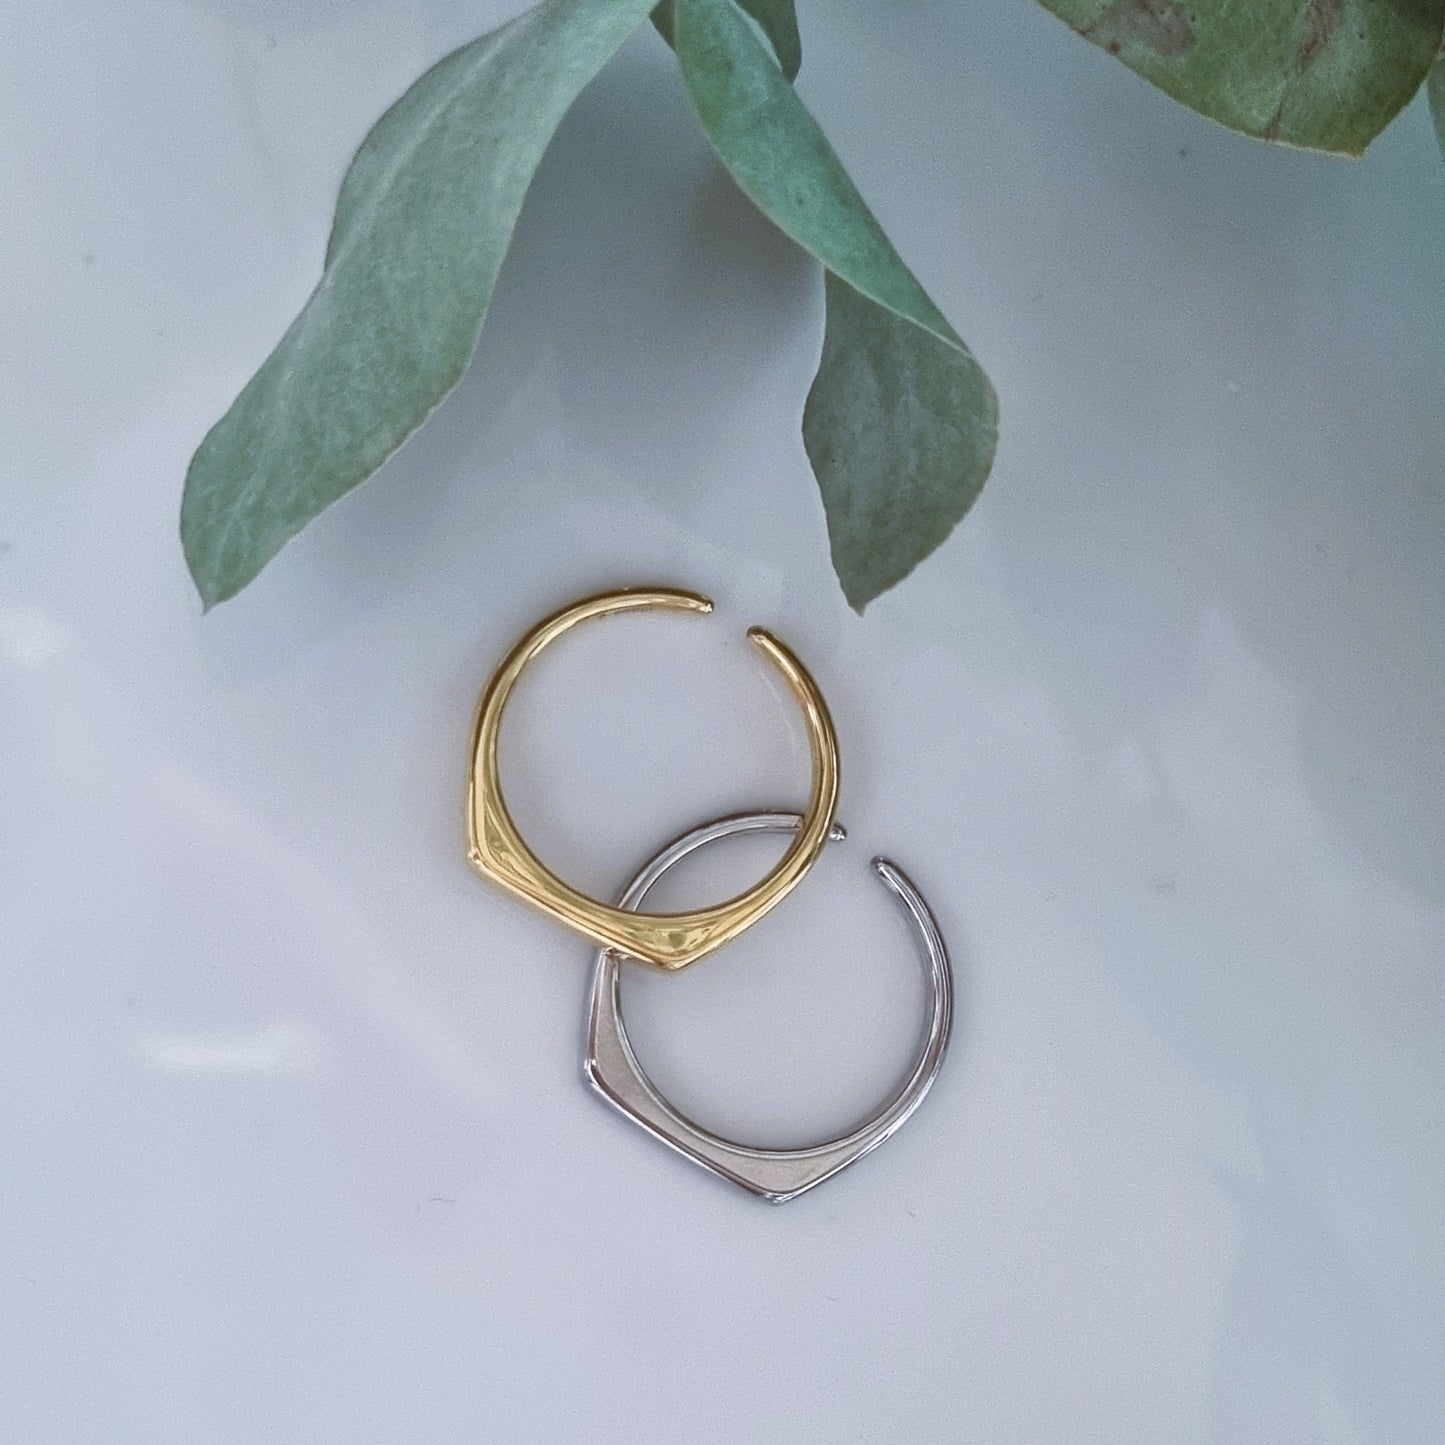 Minimal rings